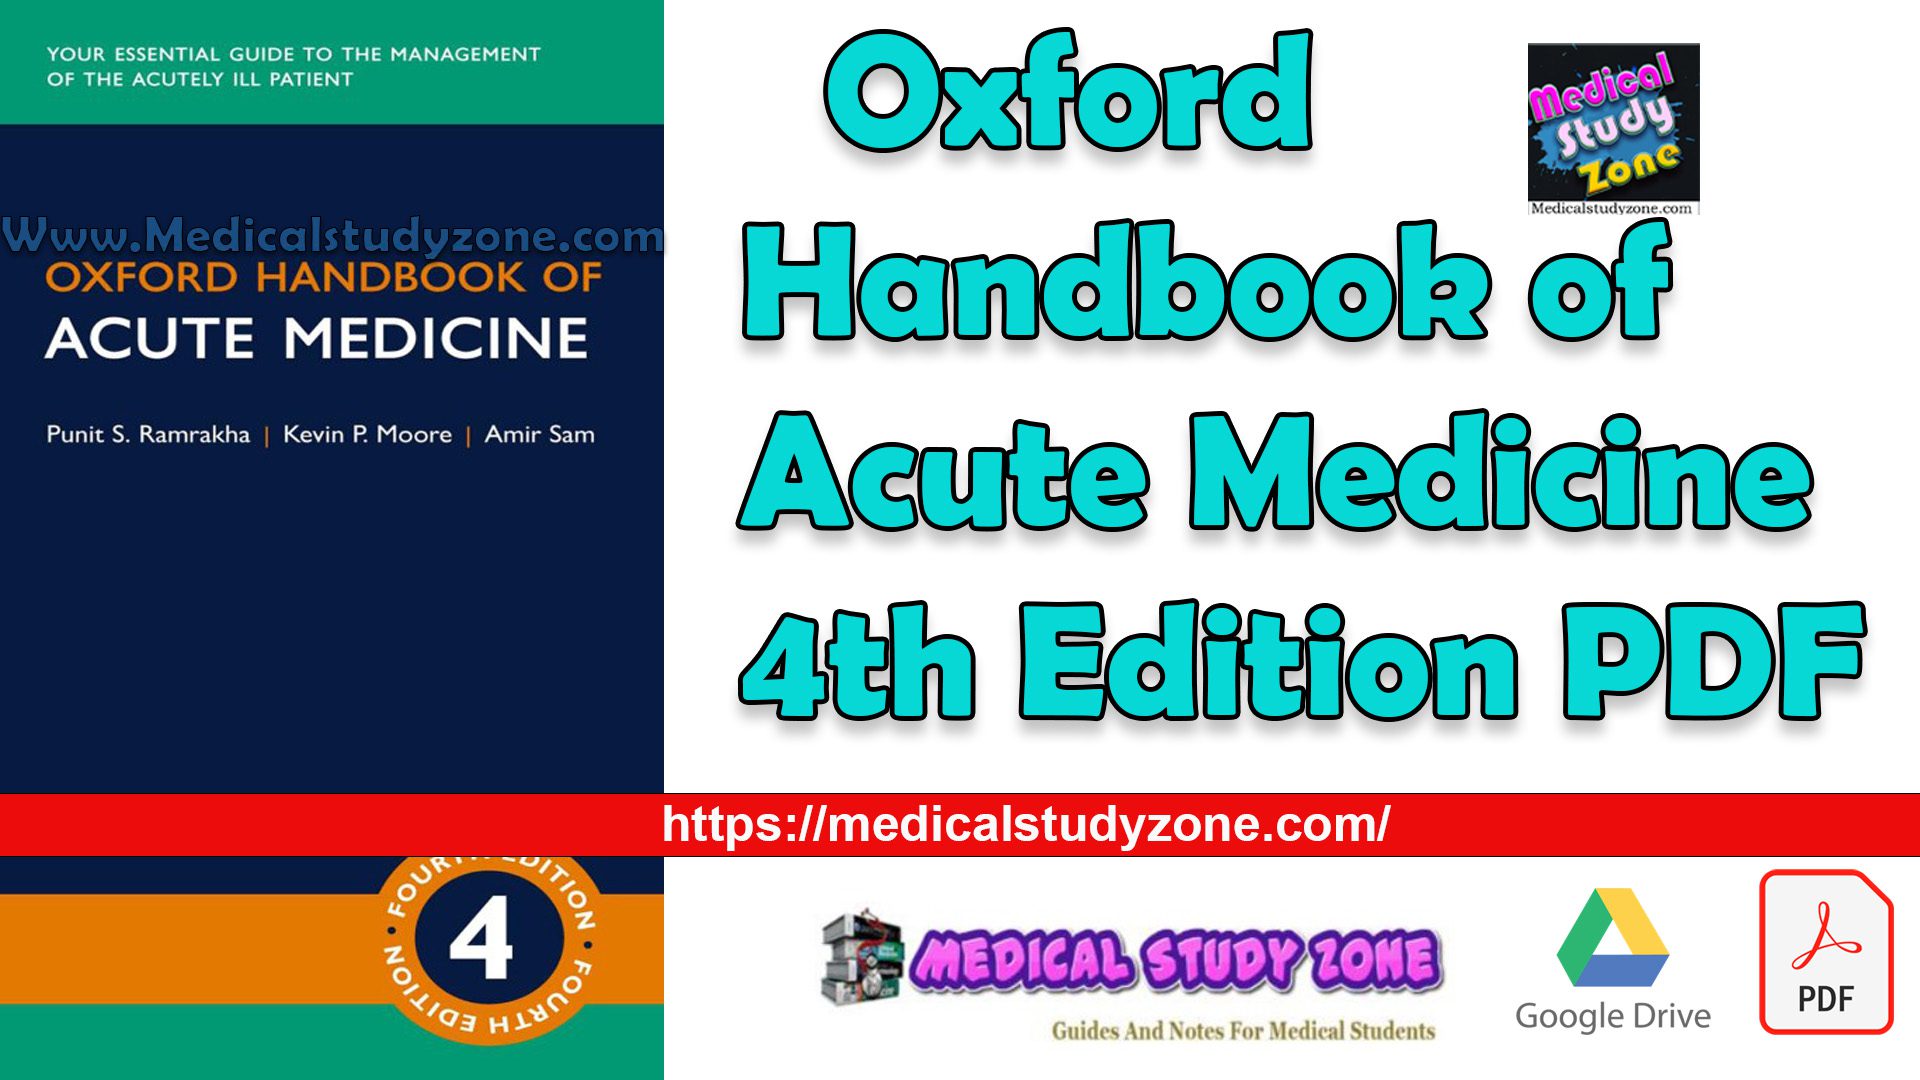 Oxford Handbook of Acute Medicine 4th Edition PDF Free Download